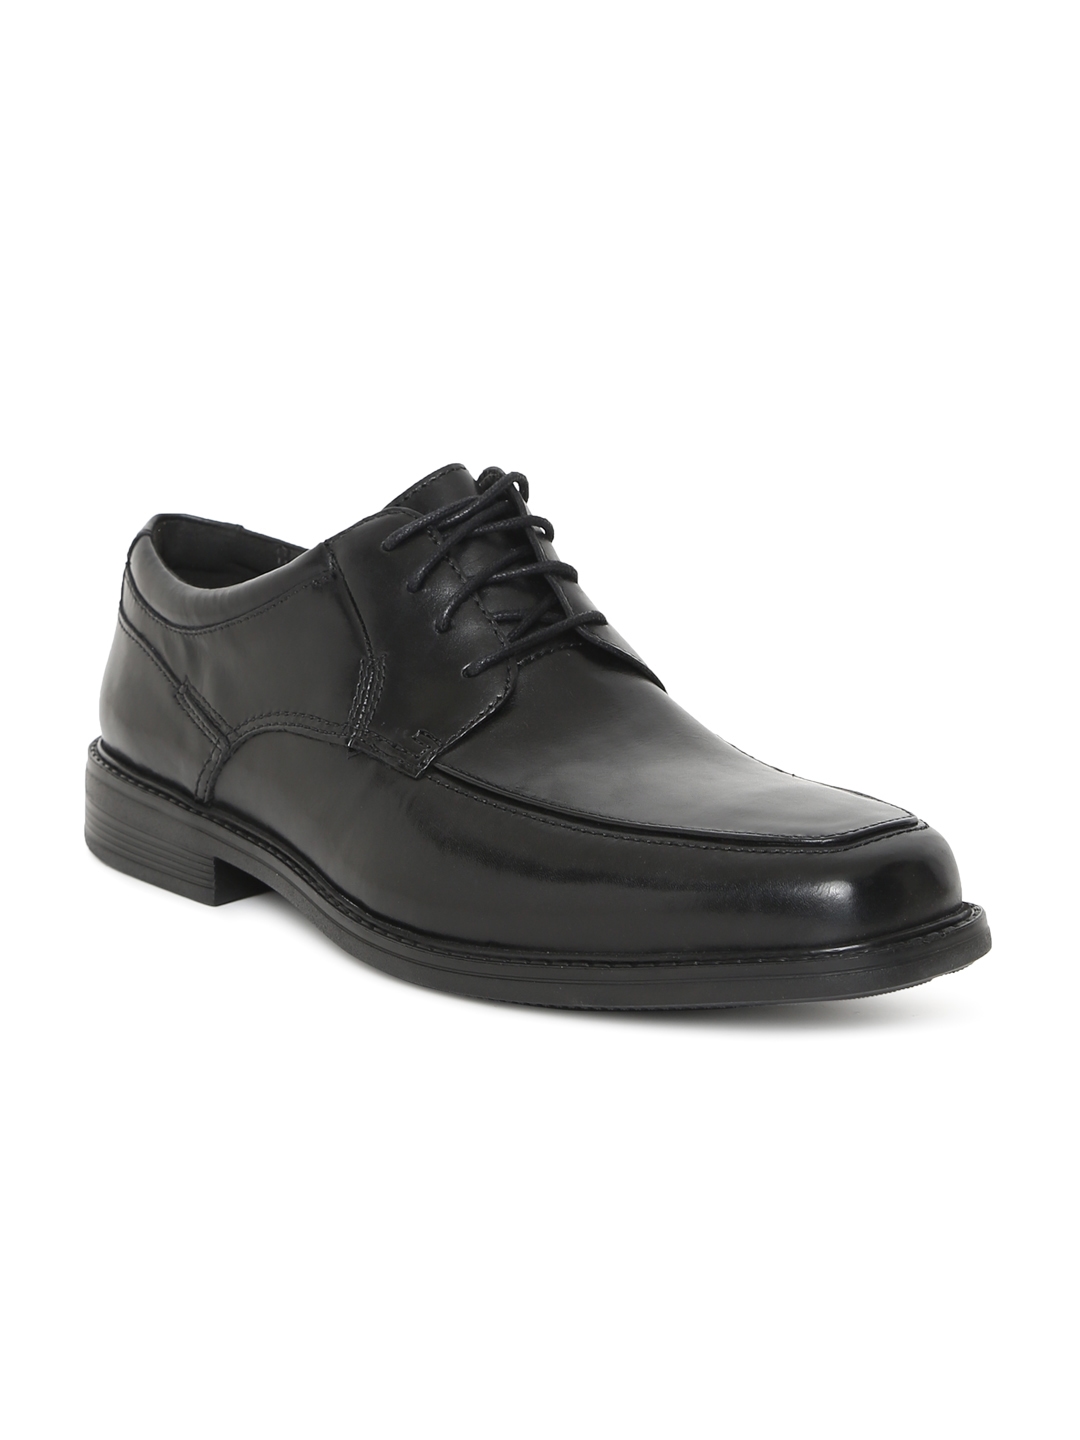 clarks mens dress shoes black